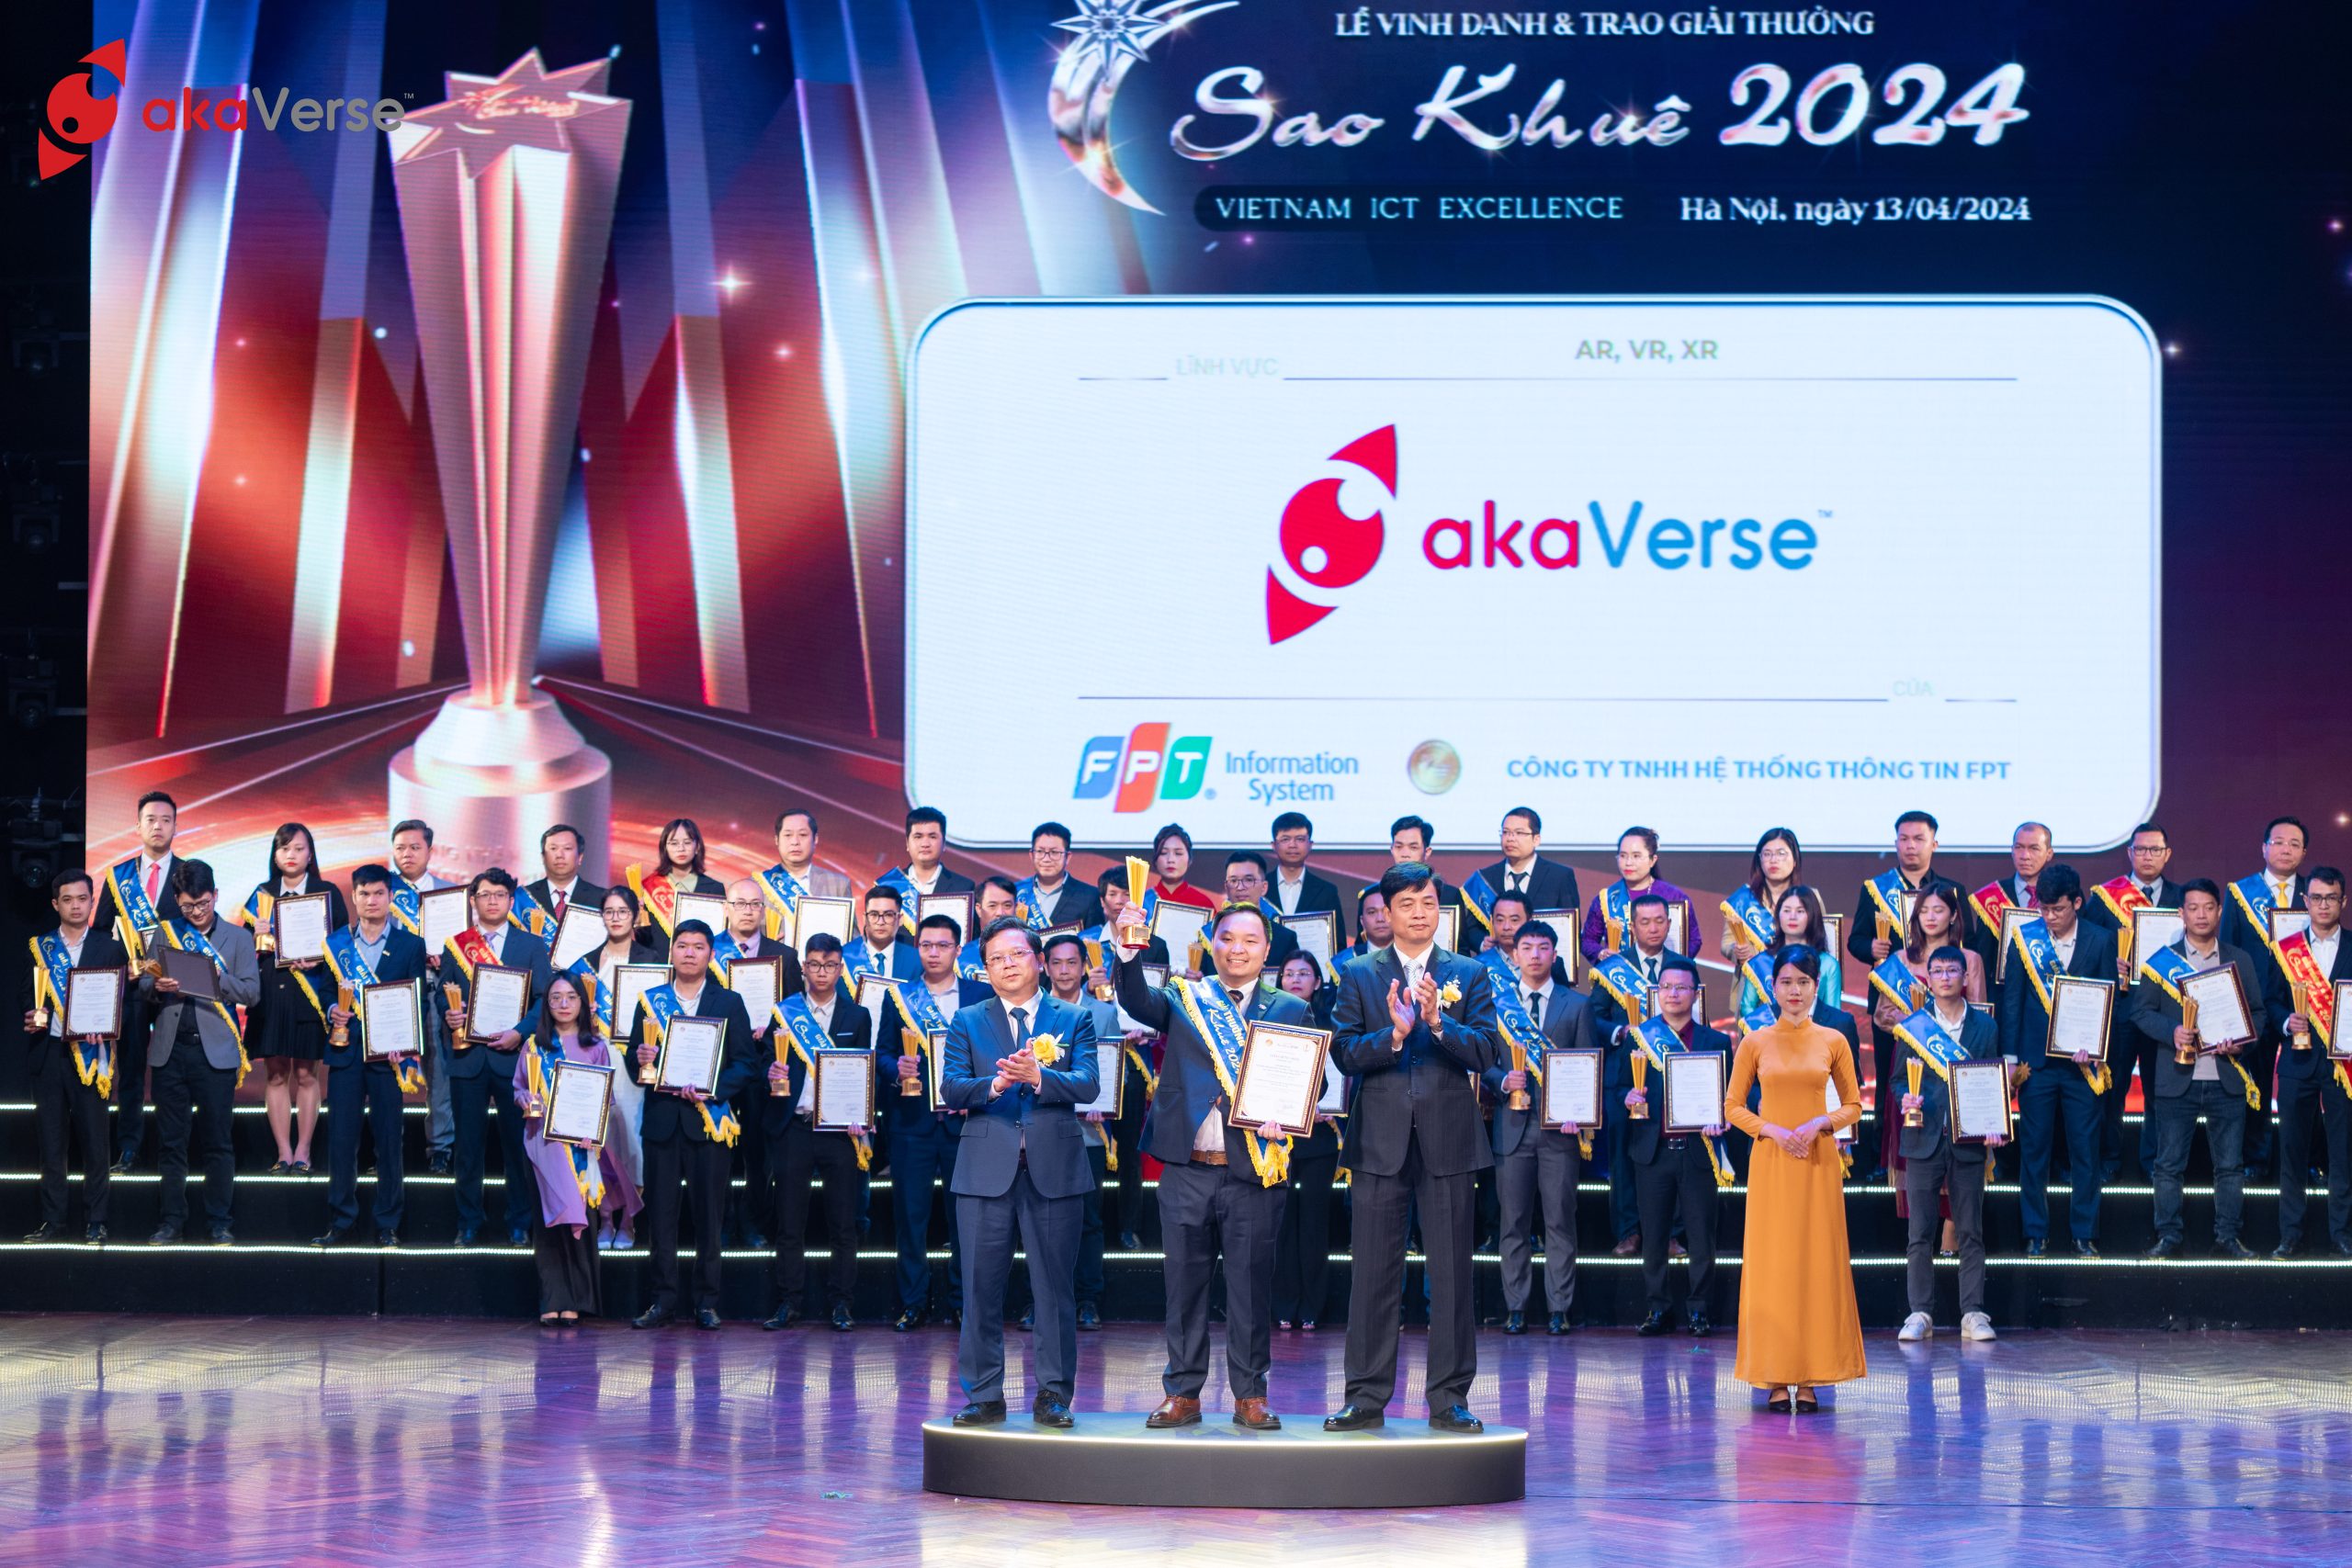 2024 Sao Khue Awards (Vietnam ICT Excellence) – VR/AR Training Solution (akaVerse)